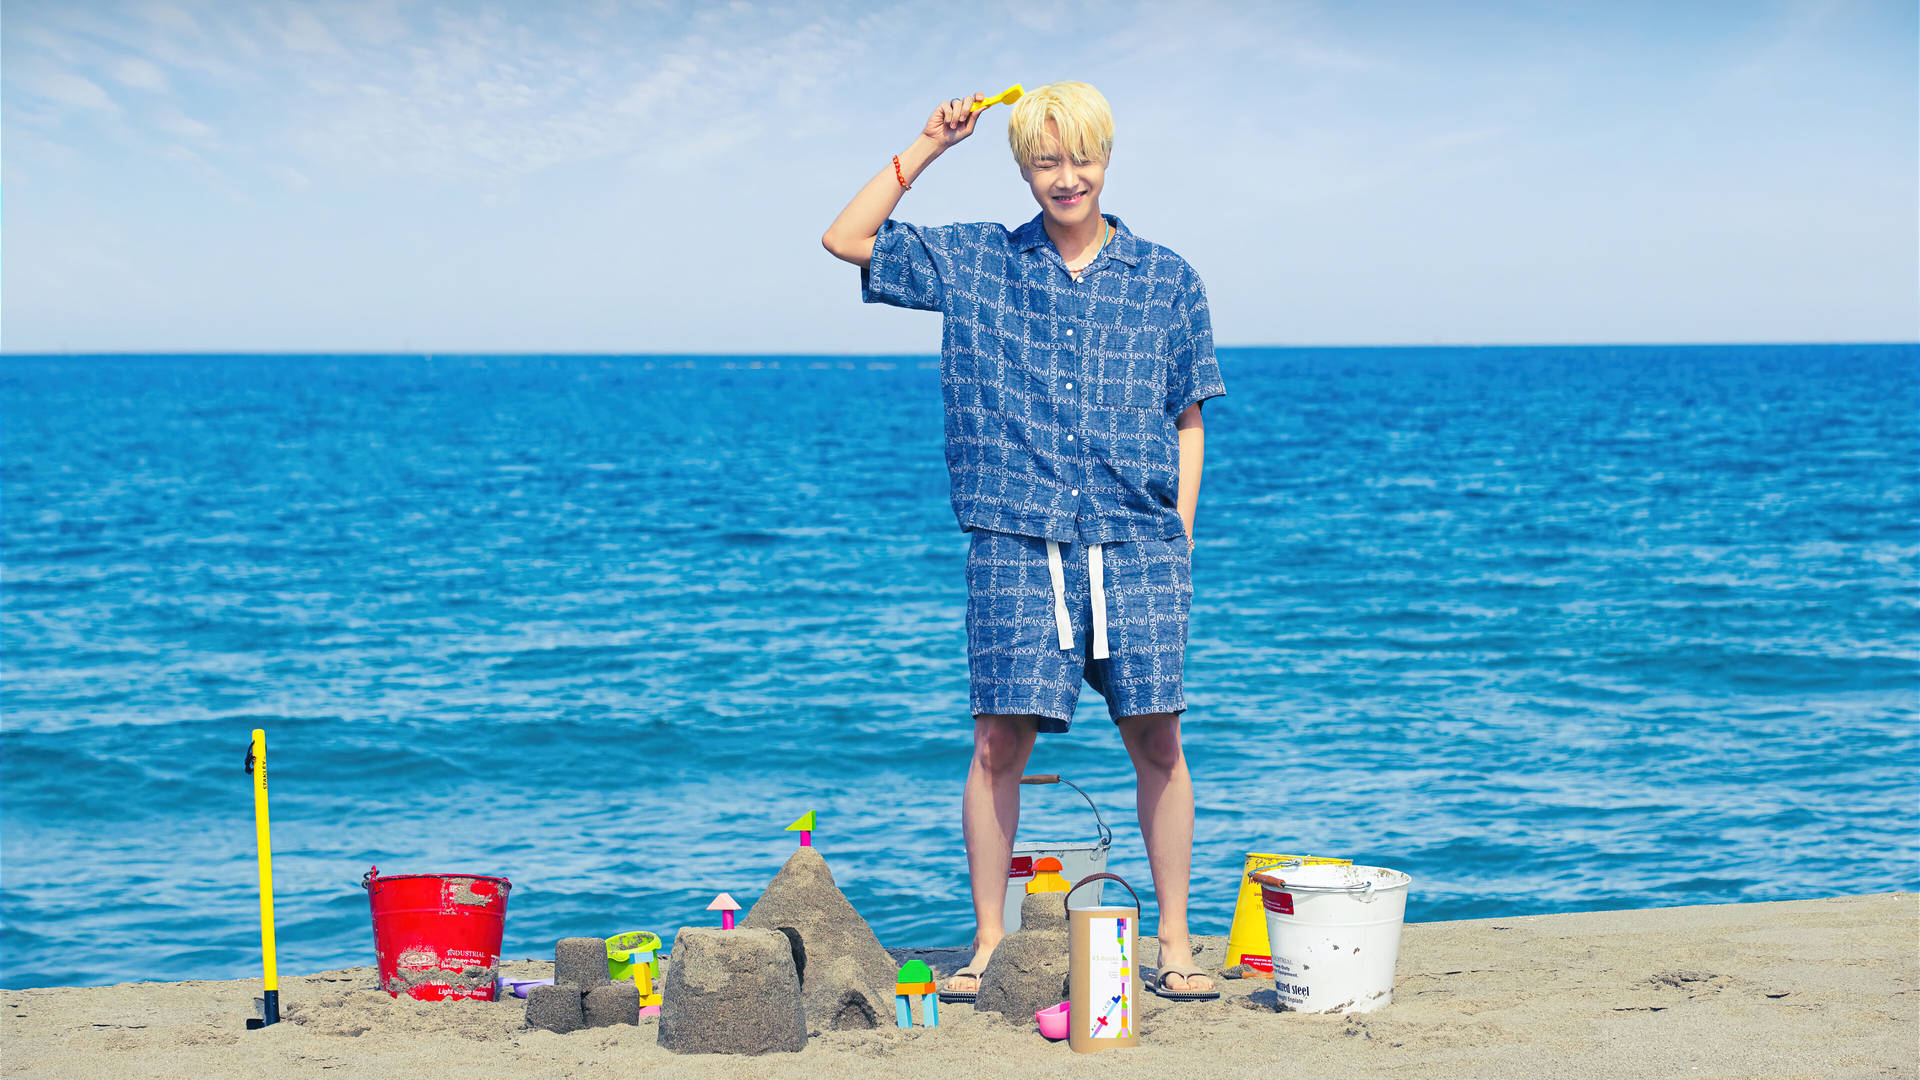 BTS J-hope On The Beach Wallpaper